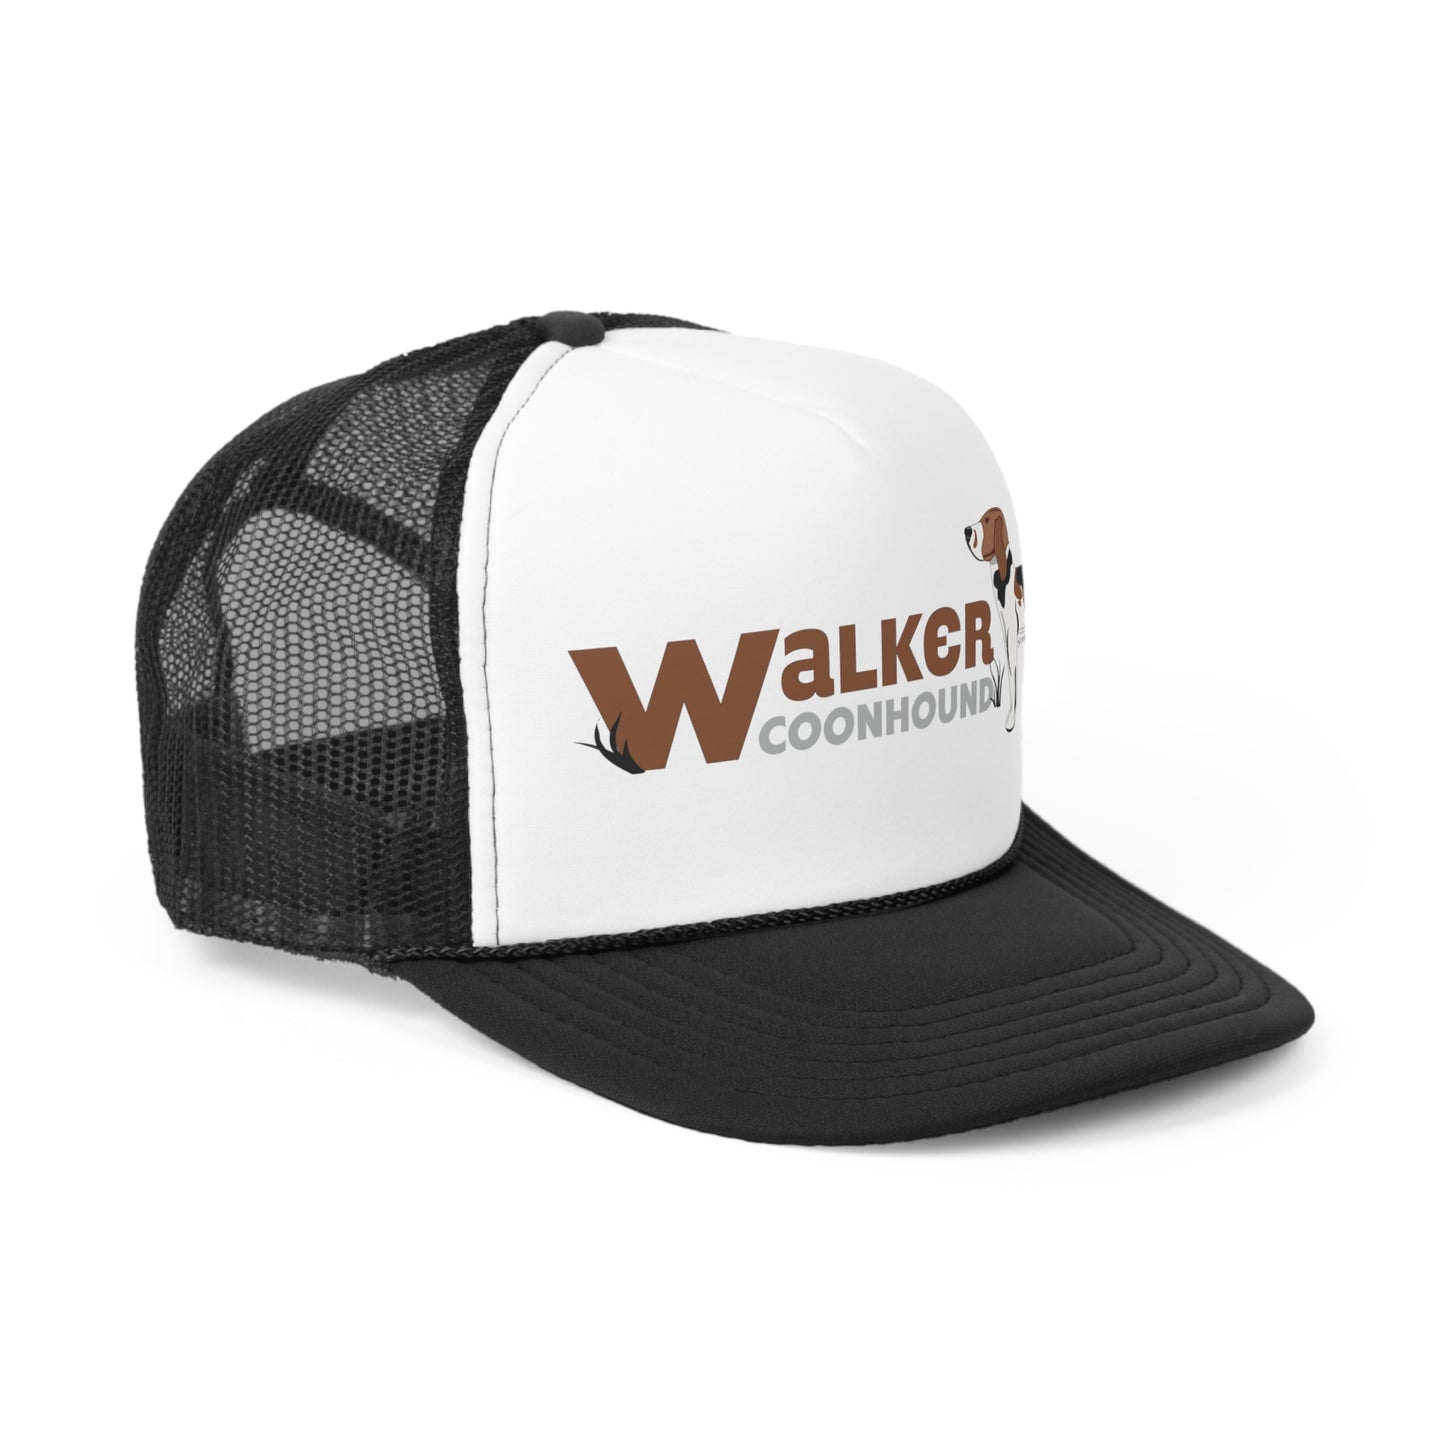 Walker Coonhound trucker hat